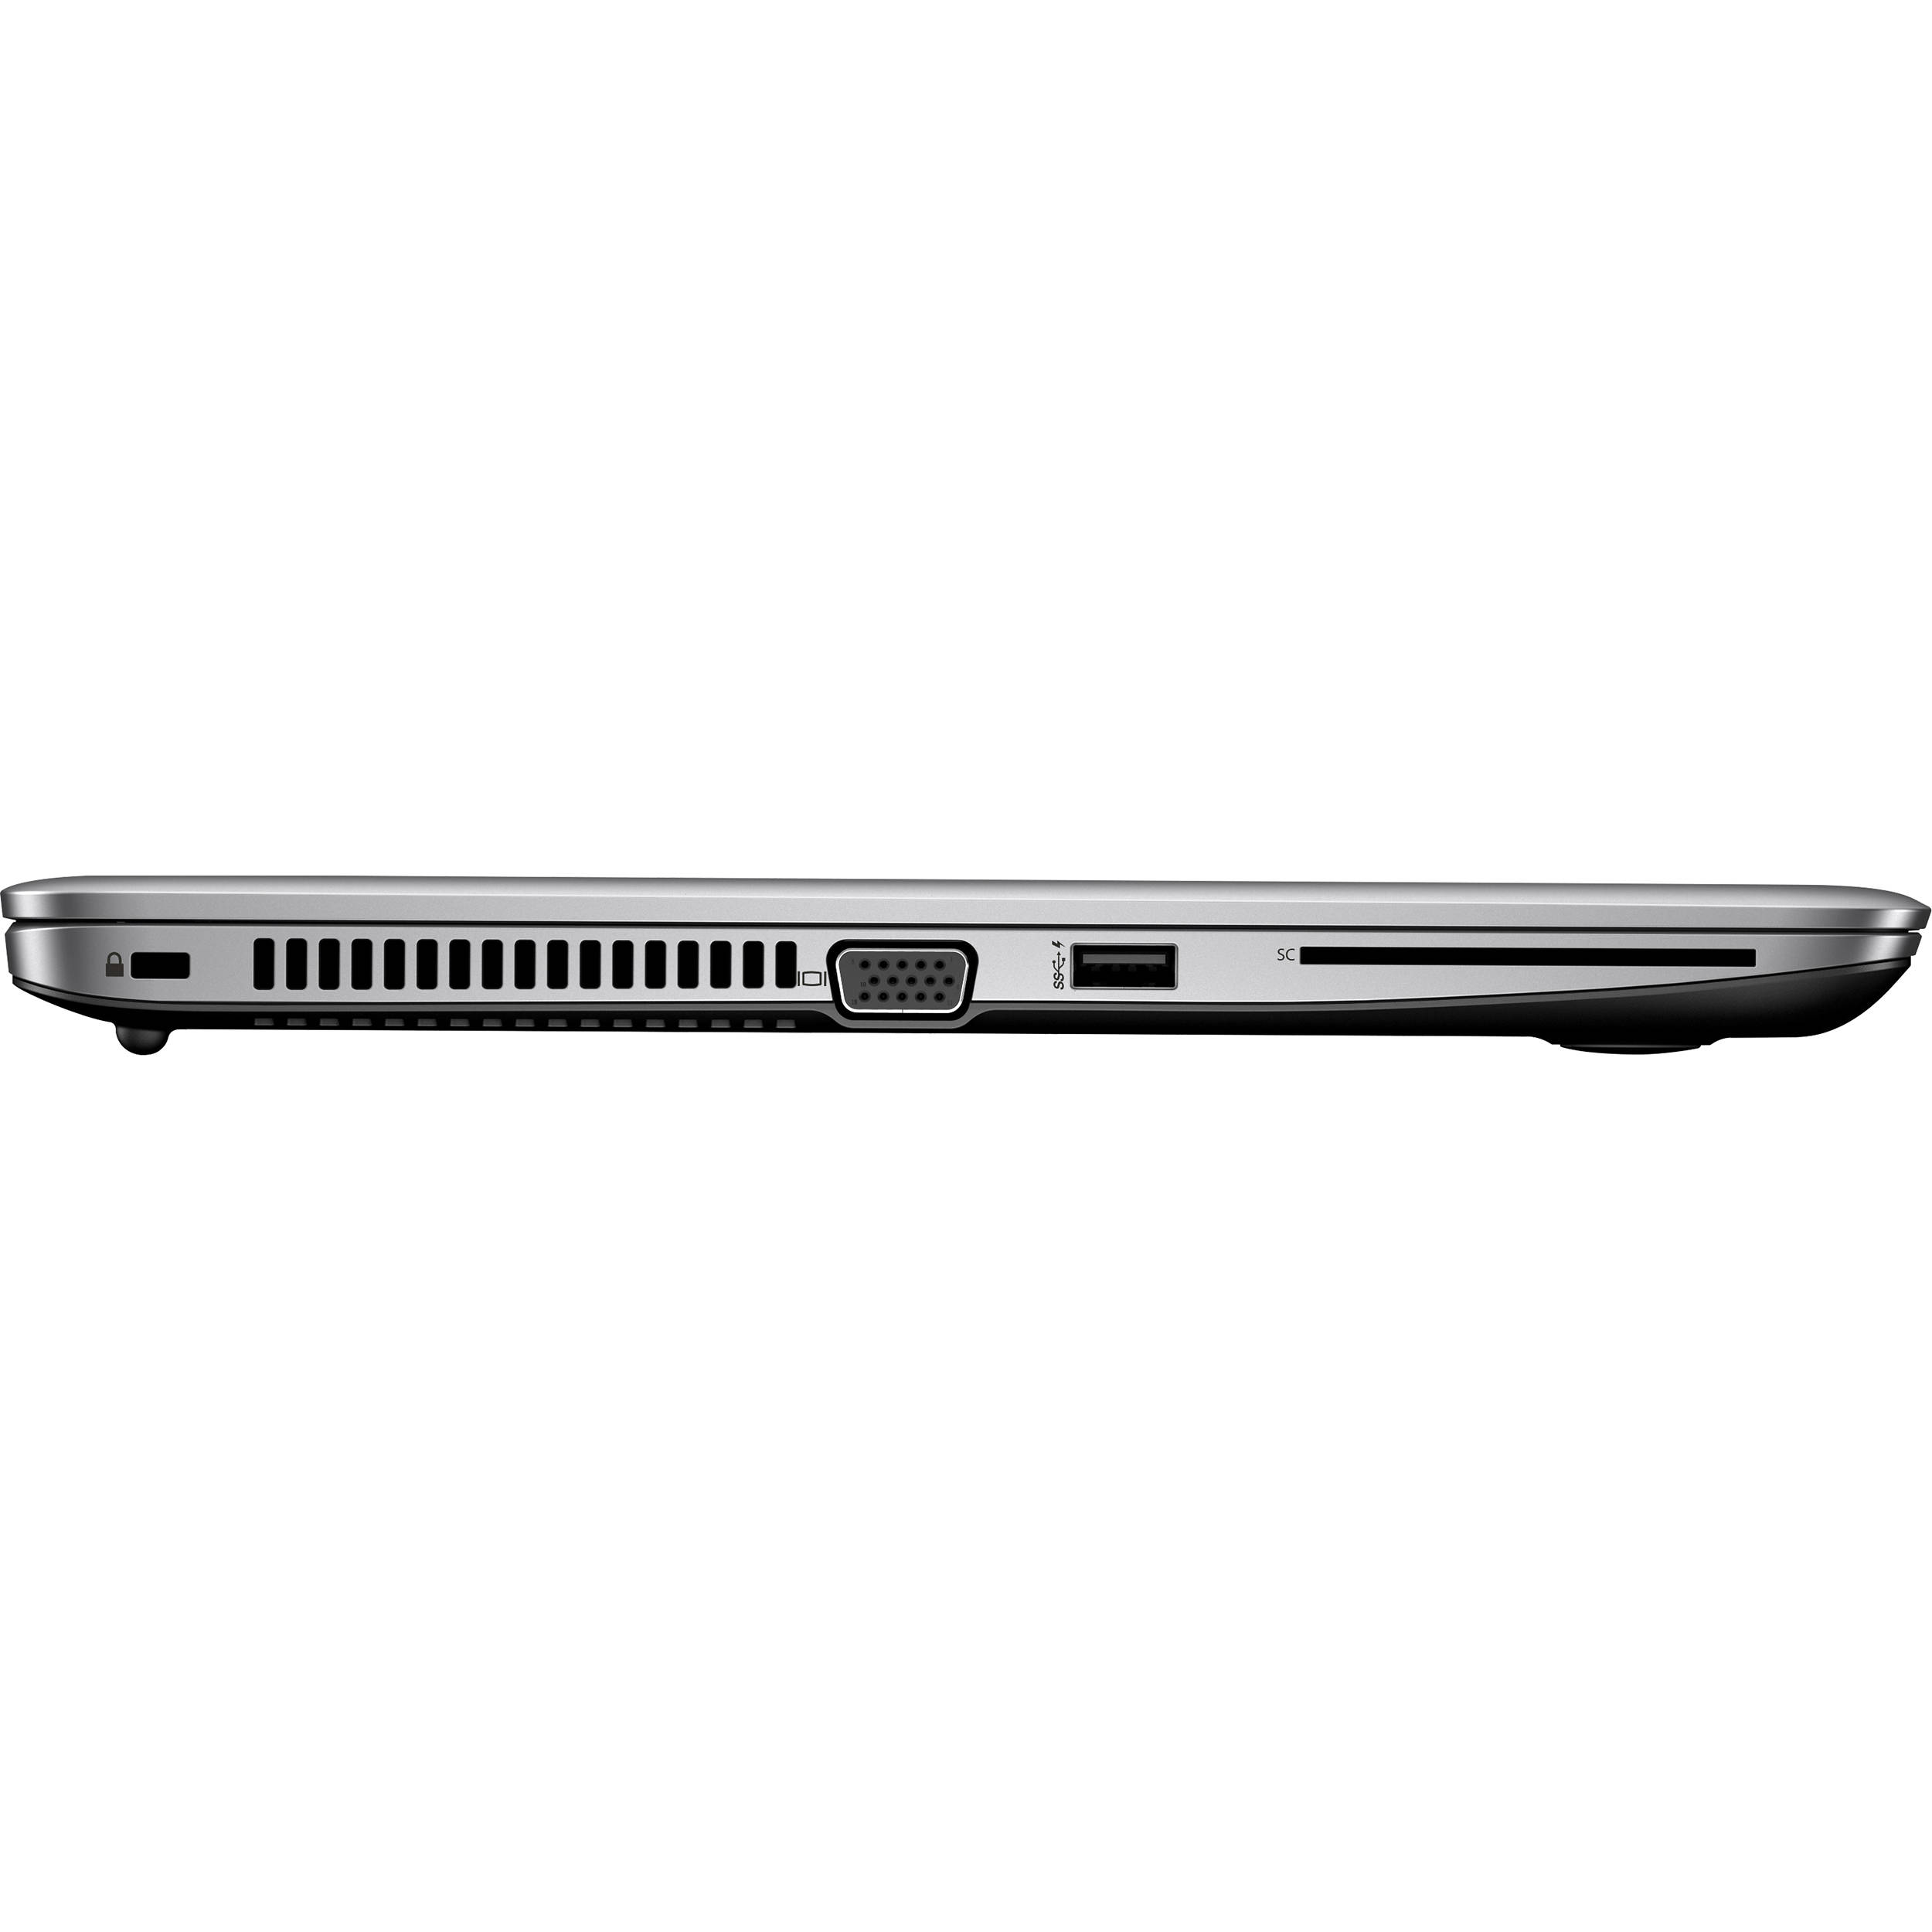 Hp Elitebook 840 G3 Laptop Intel Core i5 2.40 GHz 8GB Ram 256GB SSD Windows 10 Pro - Scratch and Dent (Refurbished) - image 5 of 6